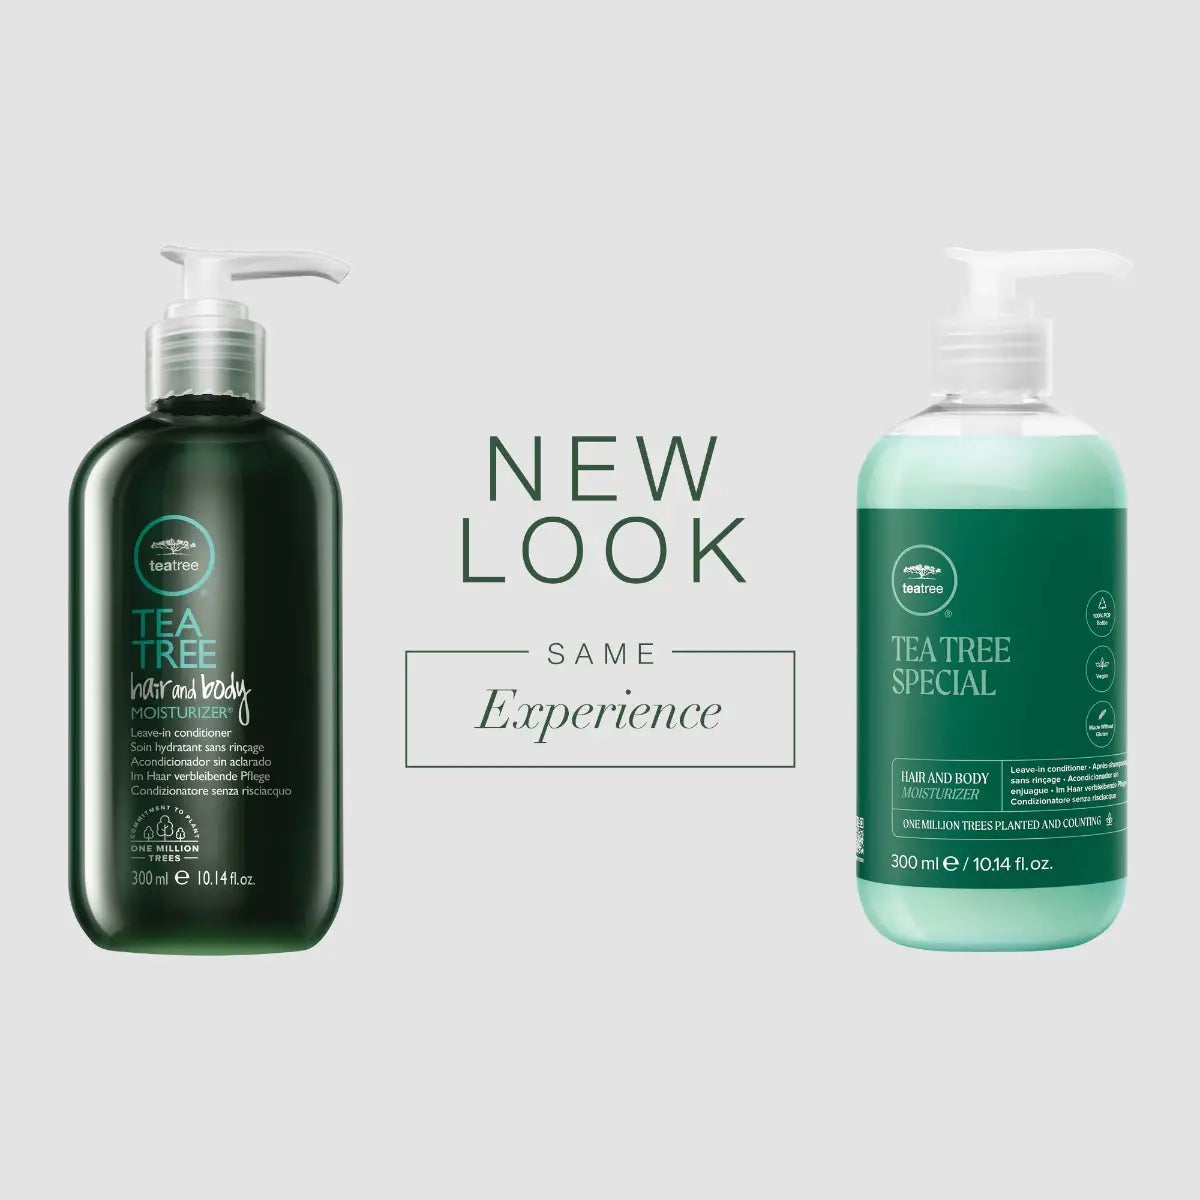 TEA TREE - Special Shampoo & Hair/Body Moisturizer Duo